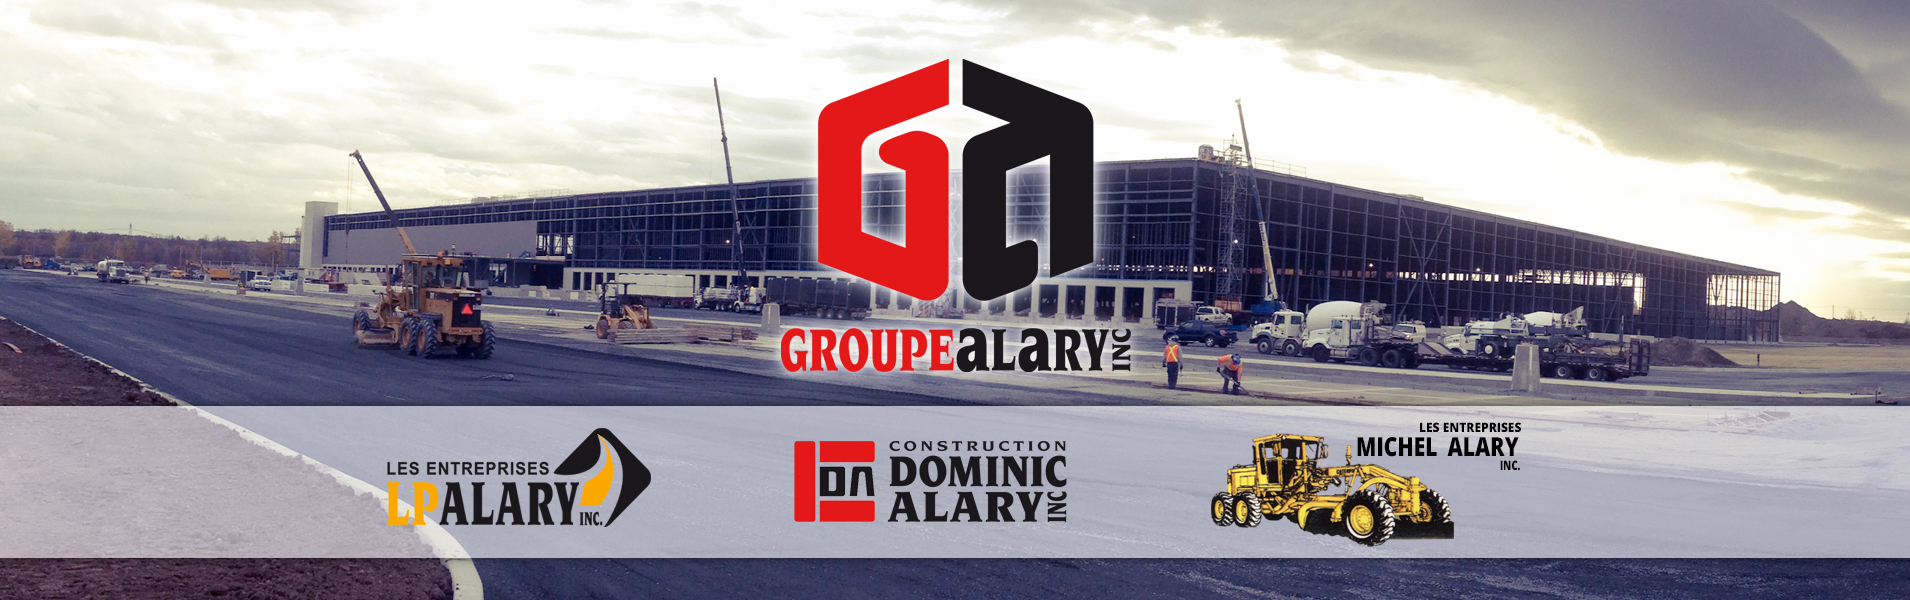 Groupe Alary | Les entreprises LP Alary, Construction Dominic Alary, Les entreprises Michel Alary